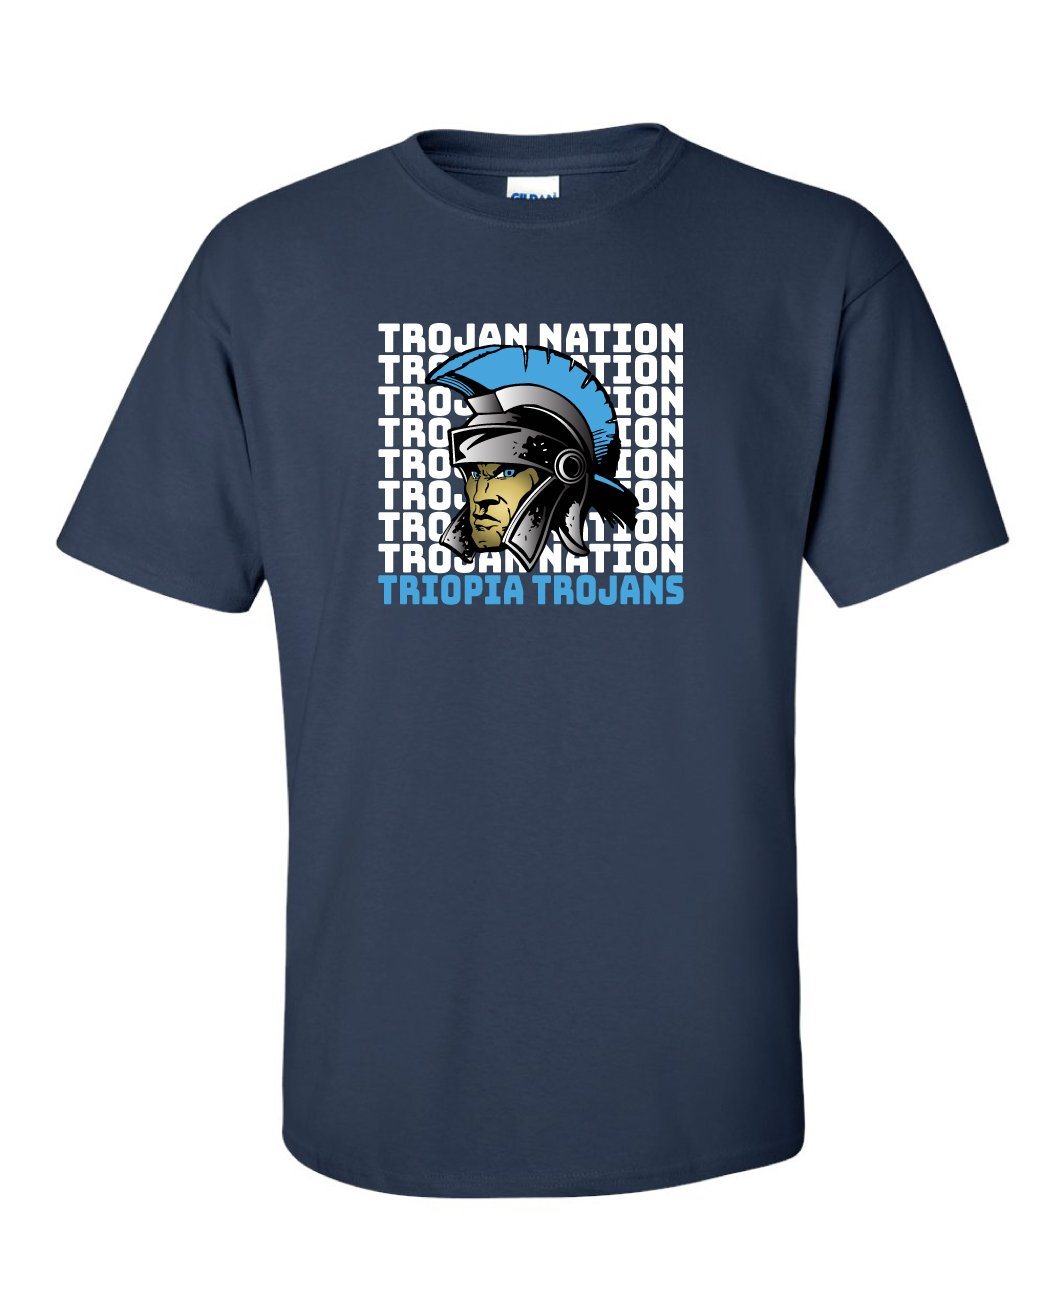 Triopia Trojans - Trojan Nation with Trojan Mascot Tshirt